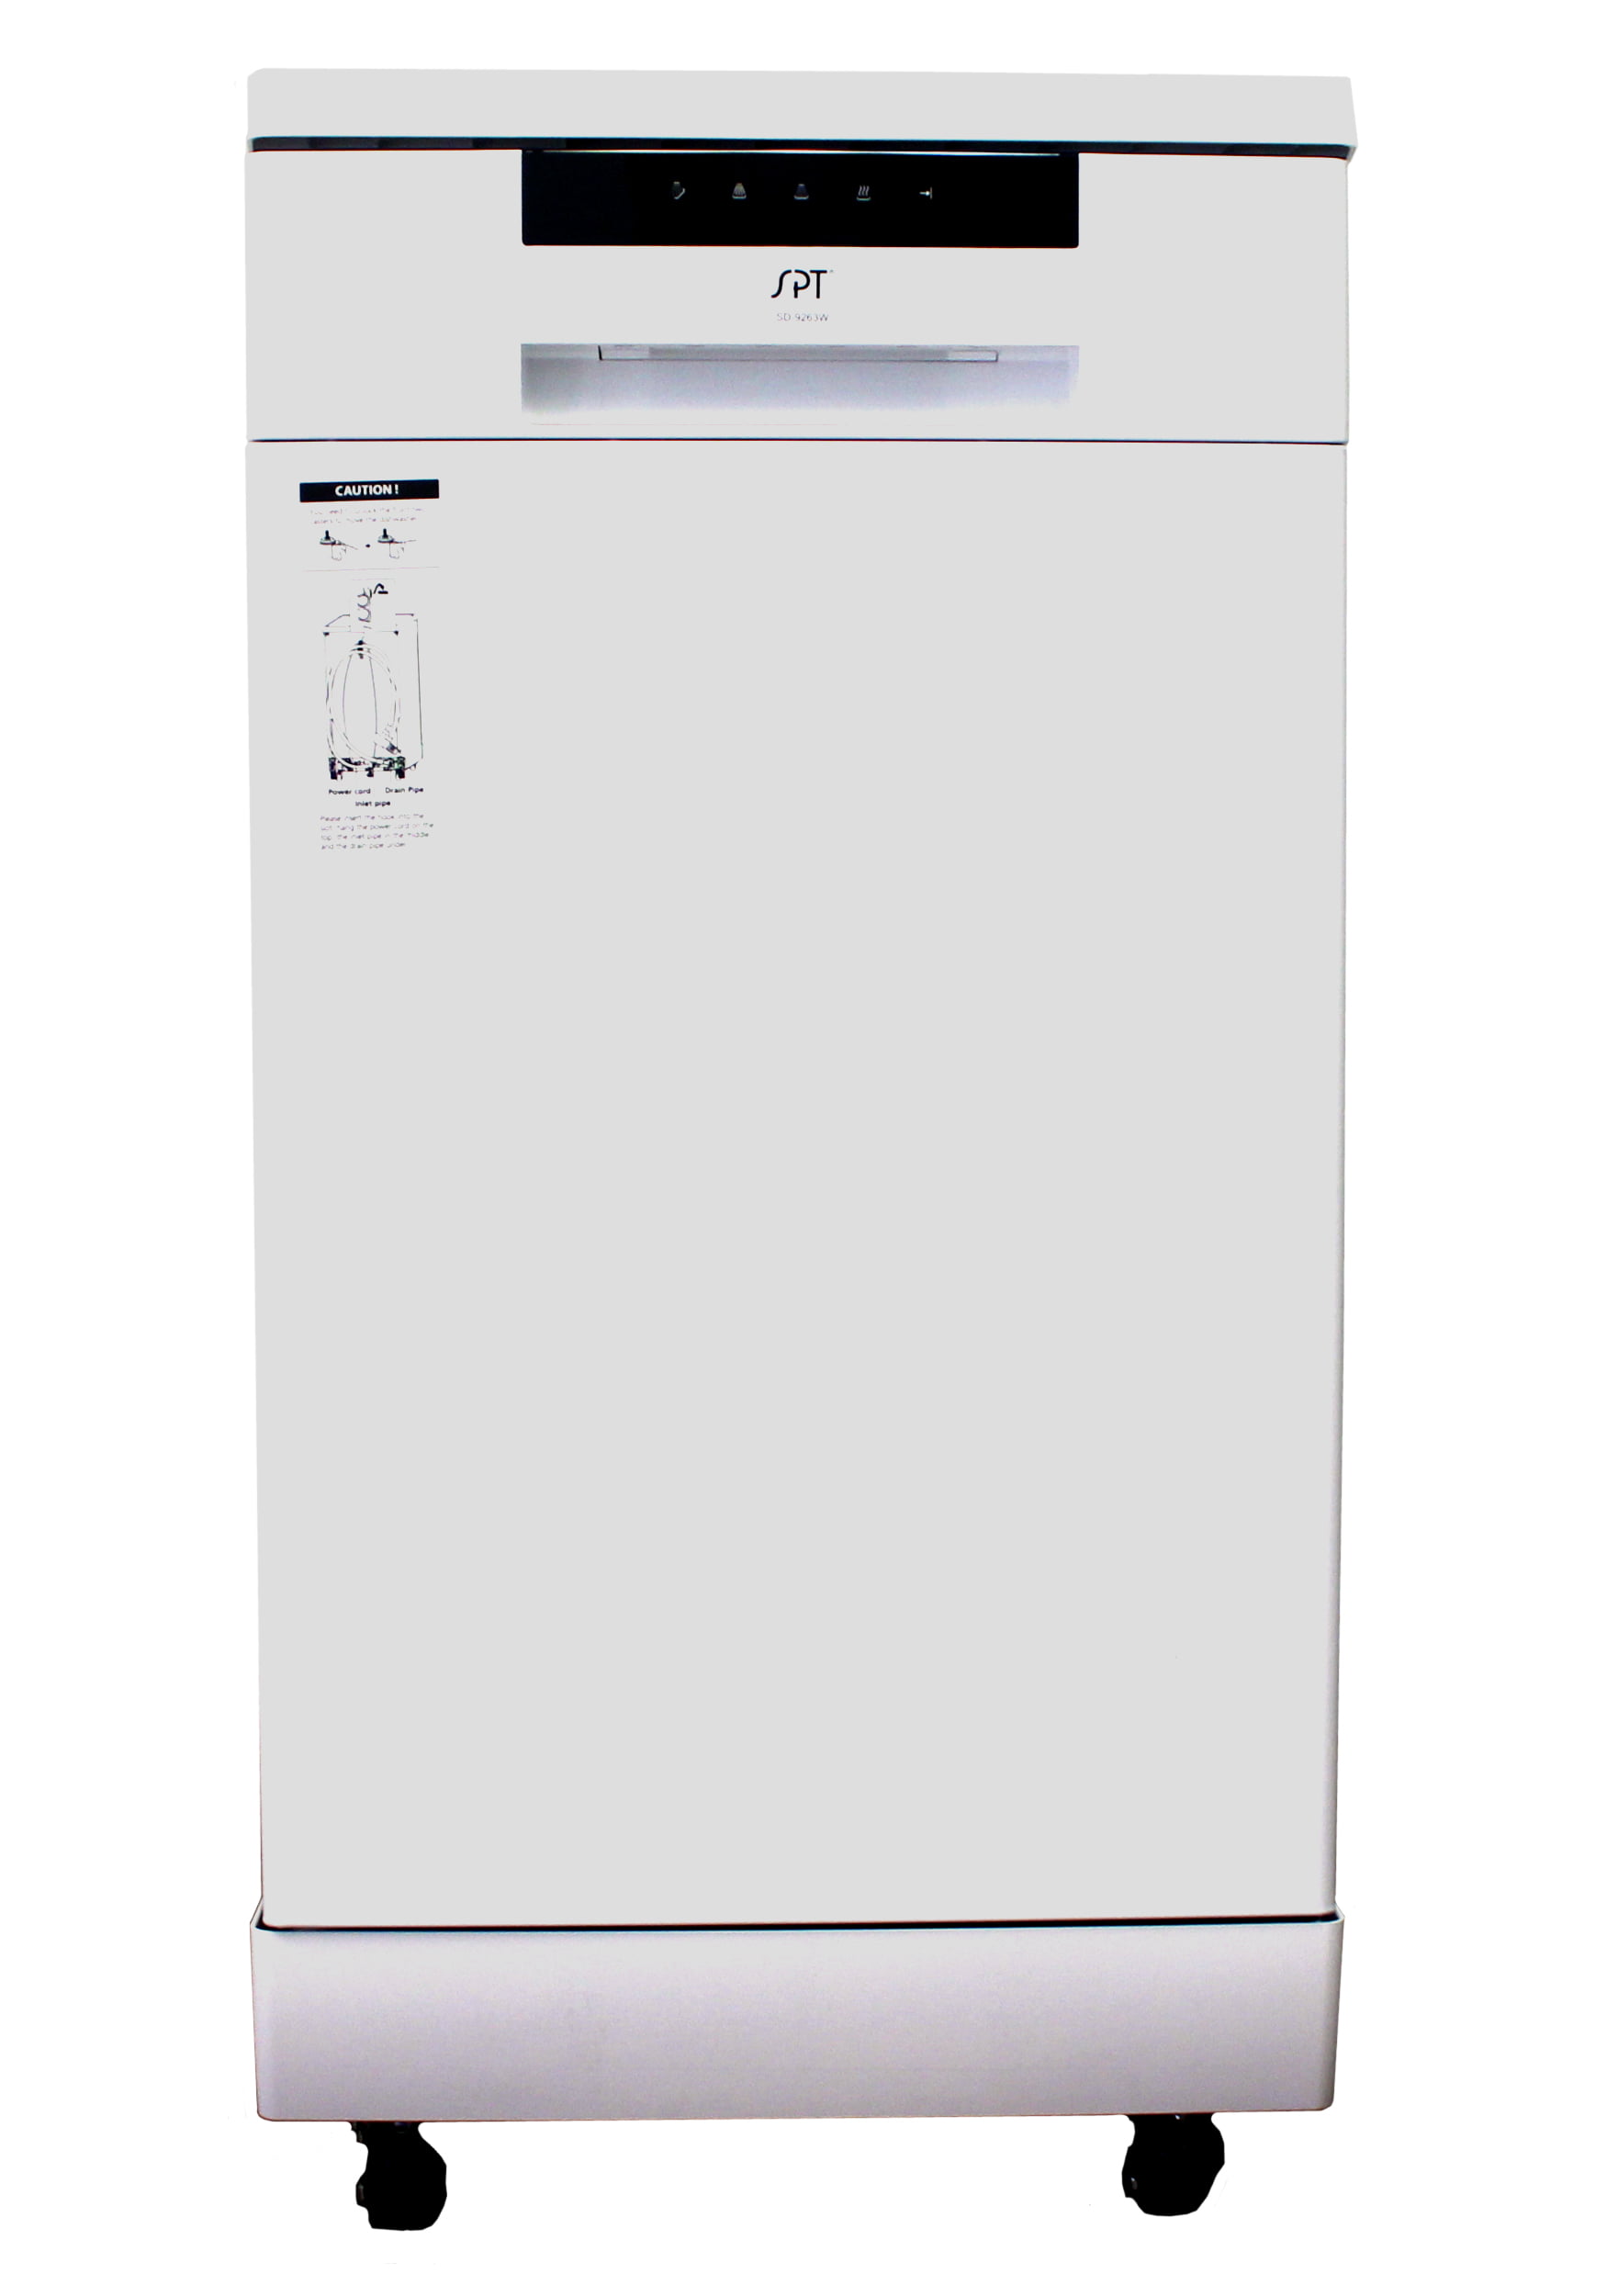 Sunpentown 18 Portable Dishwasher, Energy Star, White SD-9263W 